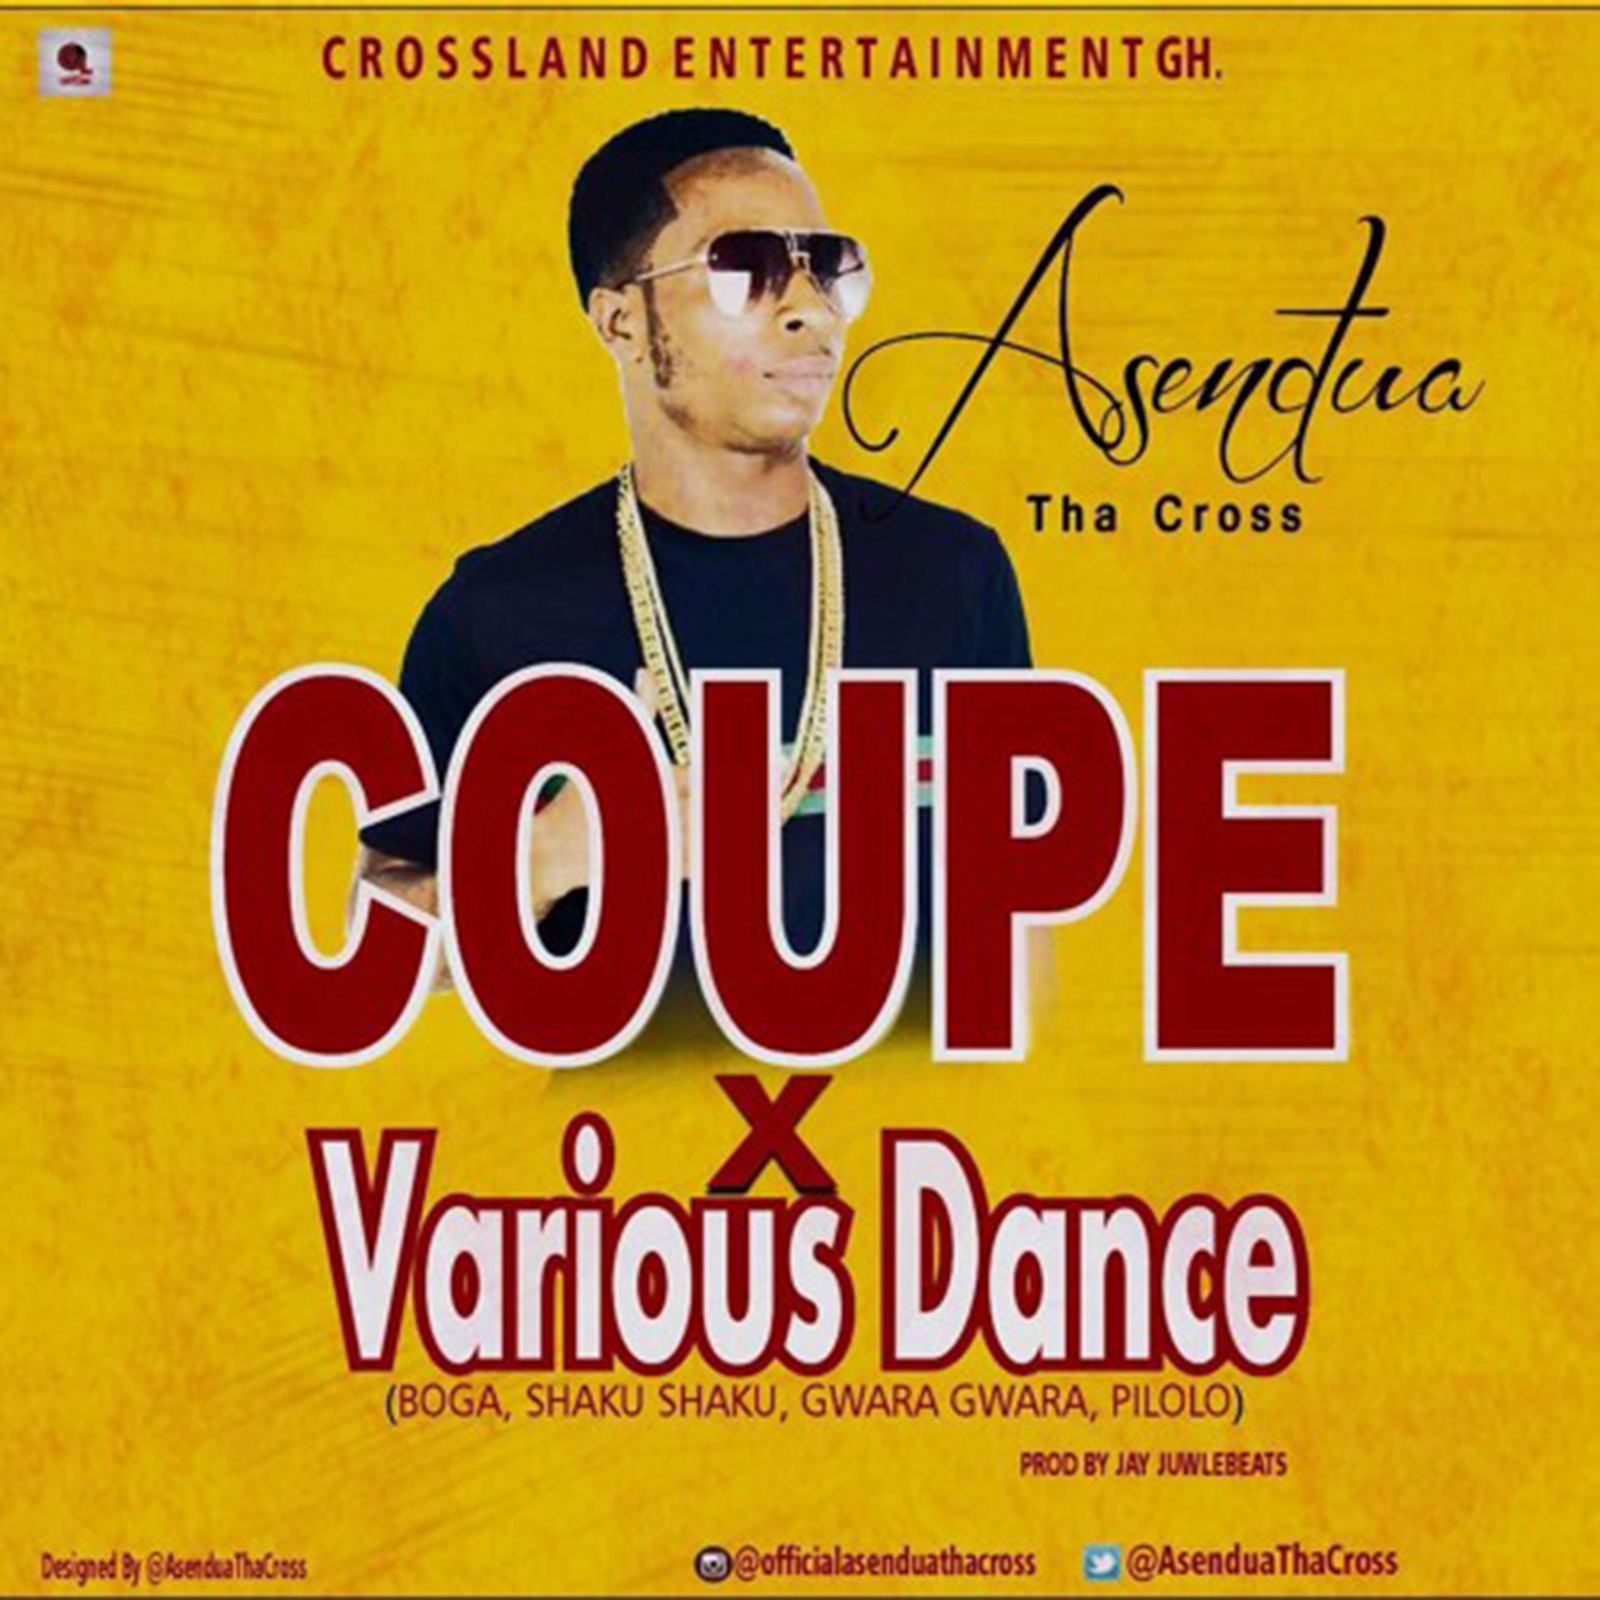 Coupe & Various Dance by Asendua Tha Cross